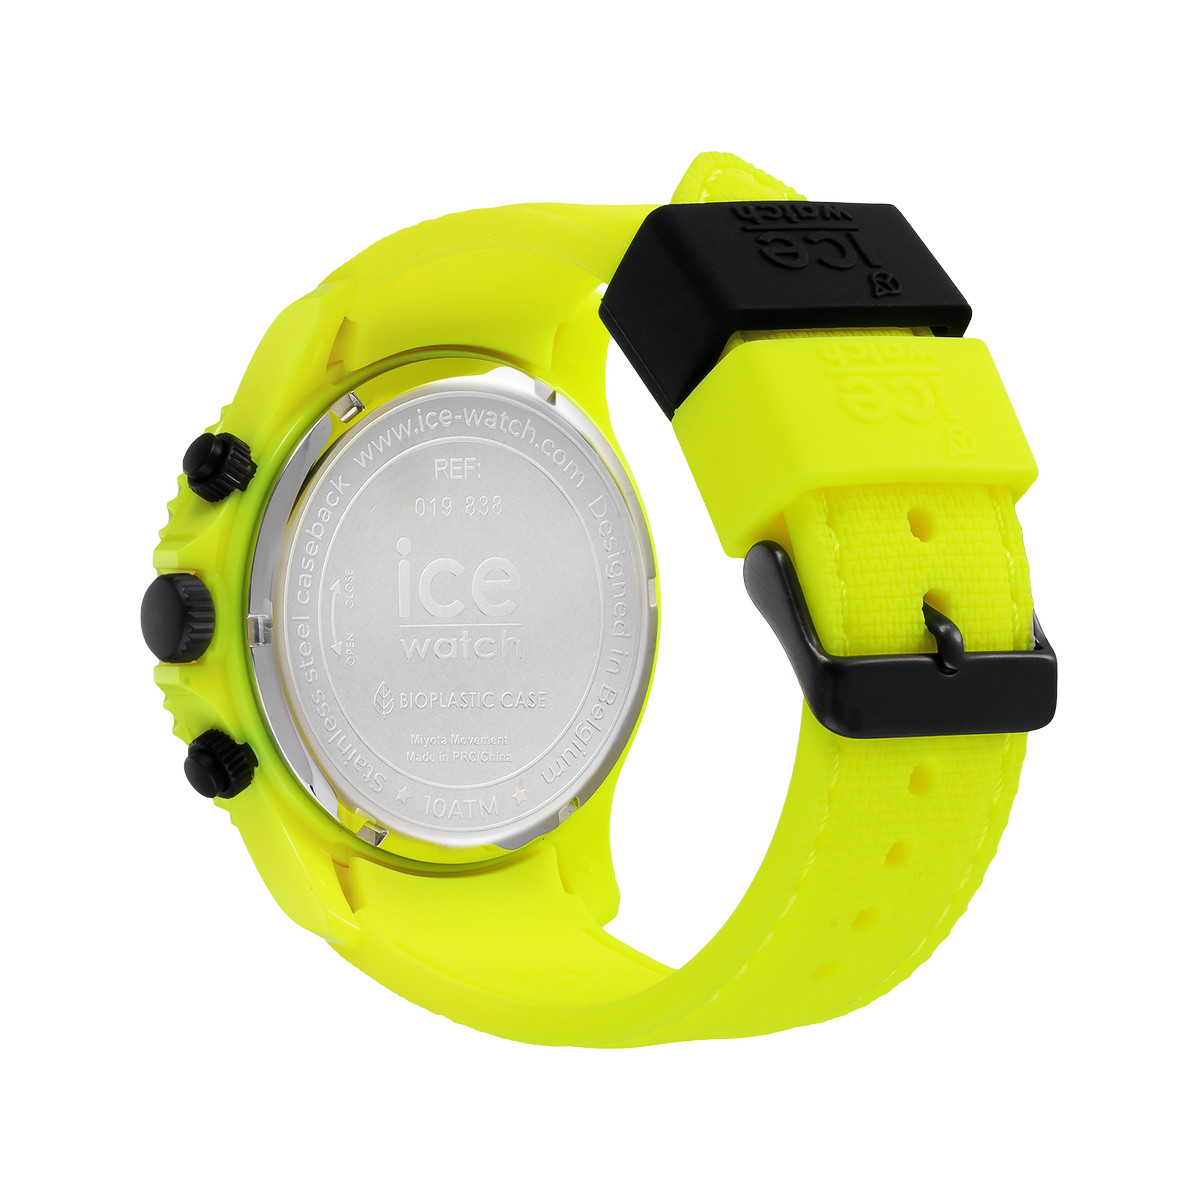 Montre Ice Watch Chrono Homme silicone jaune fluo - vue 3